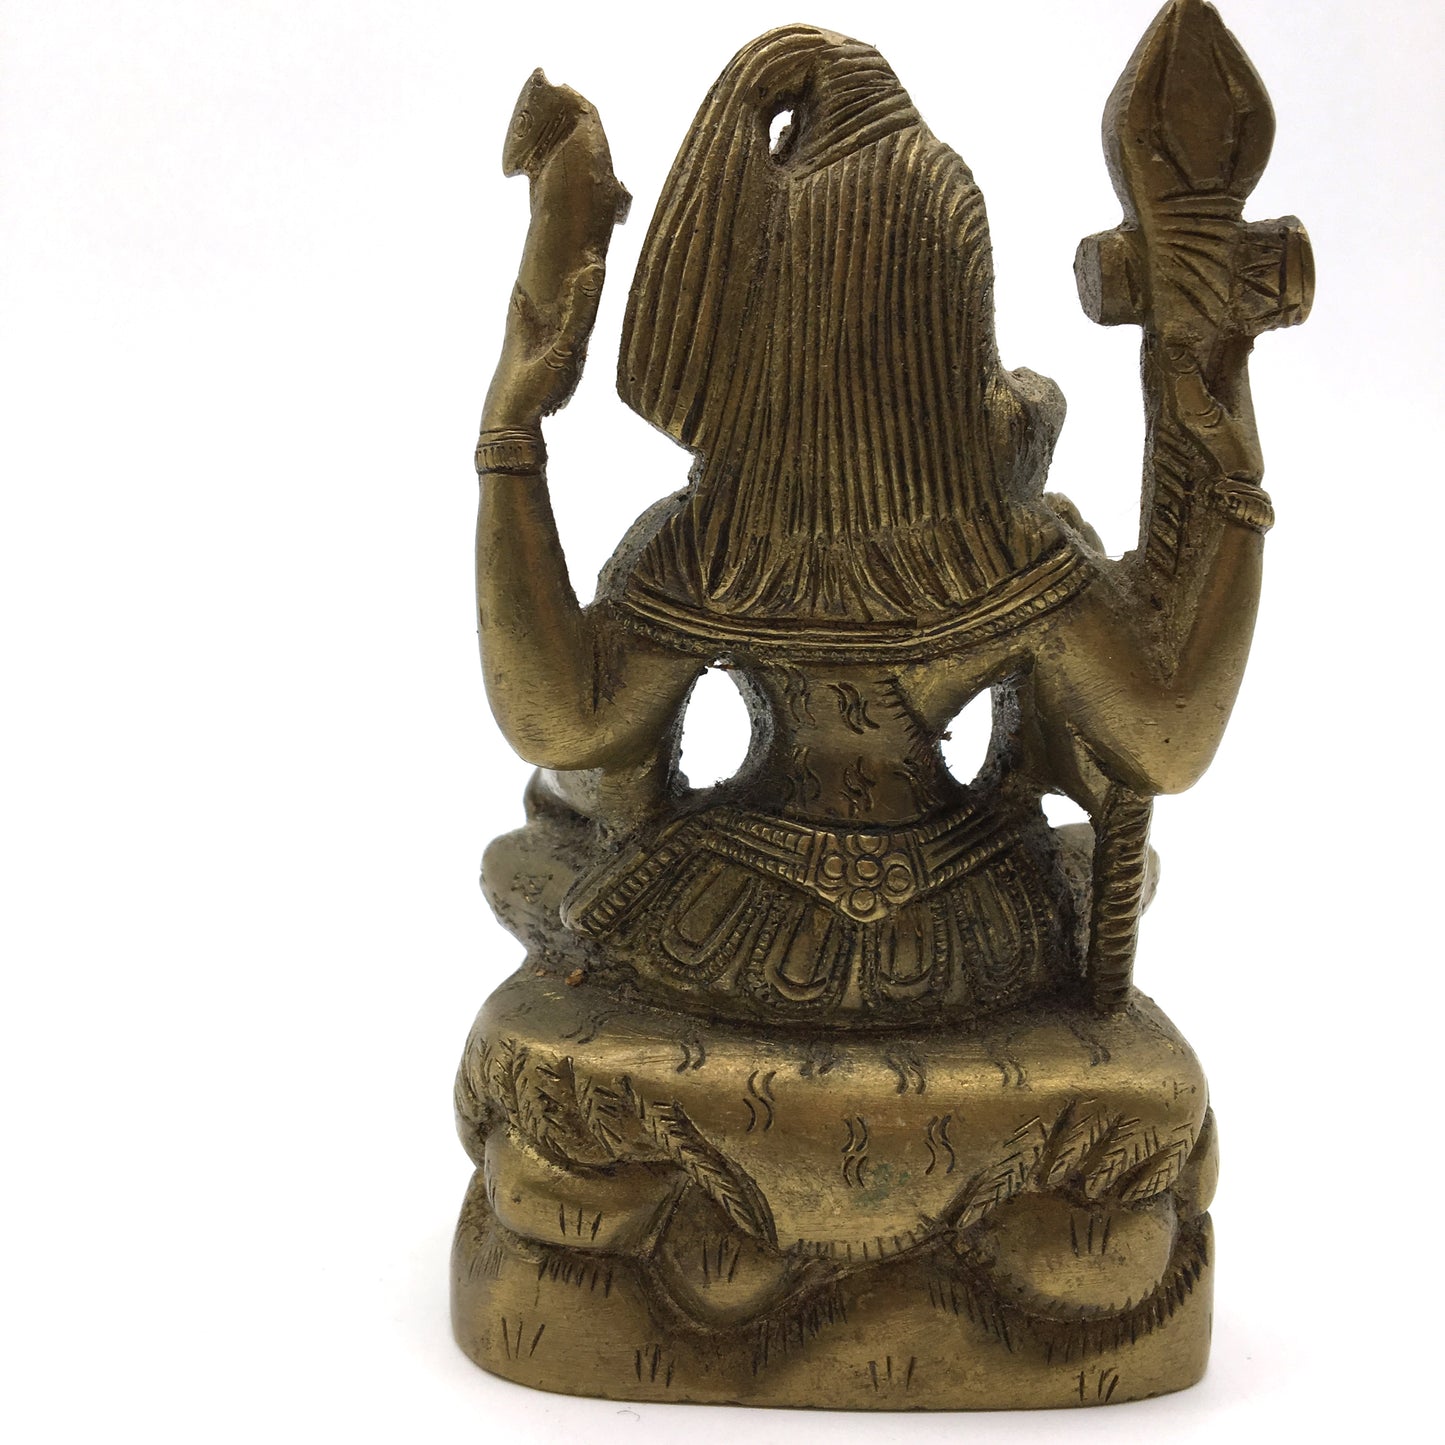 Unique Hindu Lord Shiva Idol 4 Hands Statue Vintage Antique Brass God 4" - Montecinos Ethnic